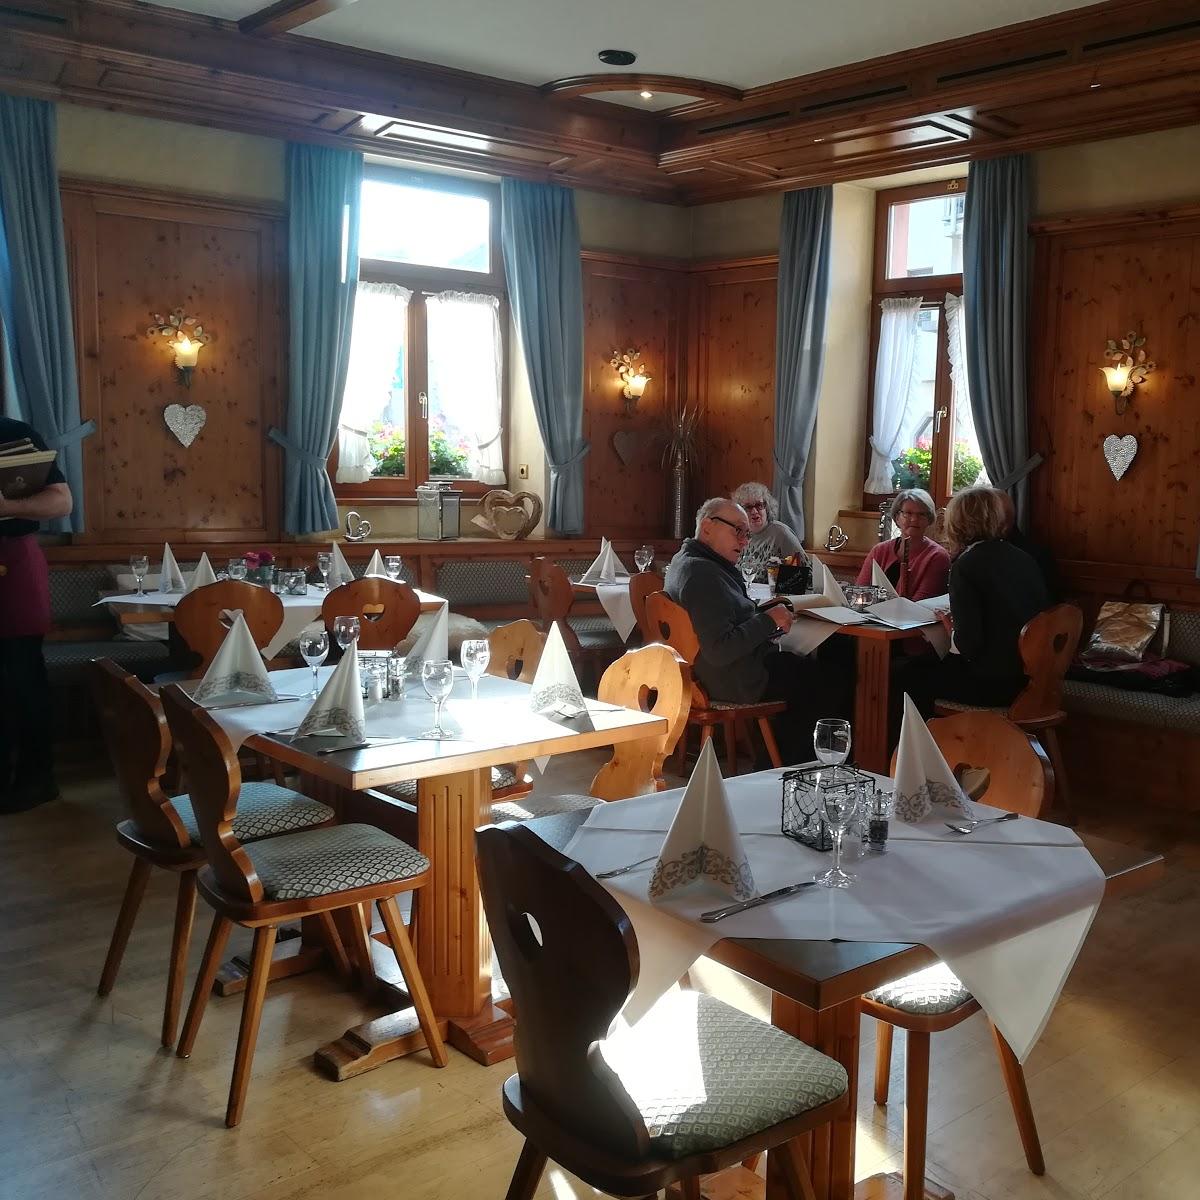 Restaurant "Restaurant Goldener Engel" in Edesheim